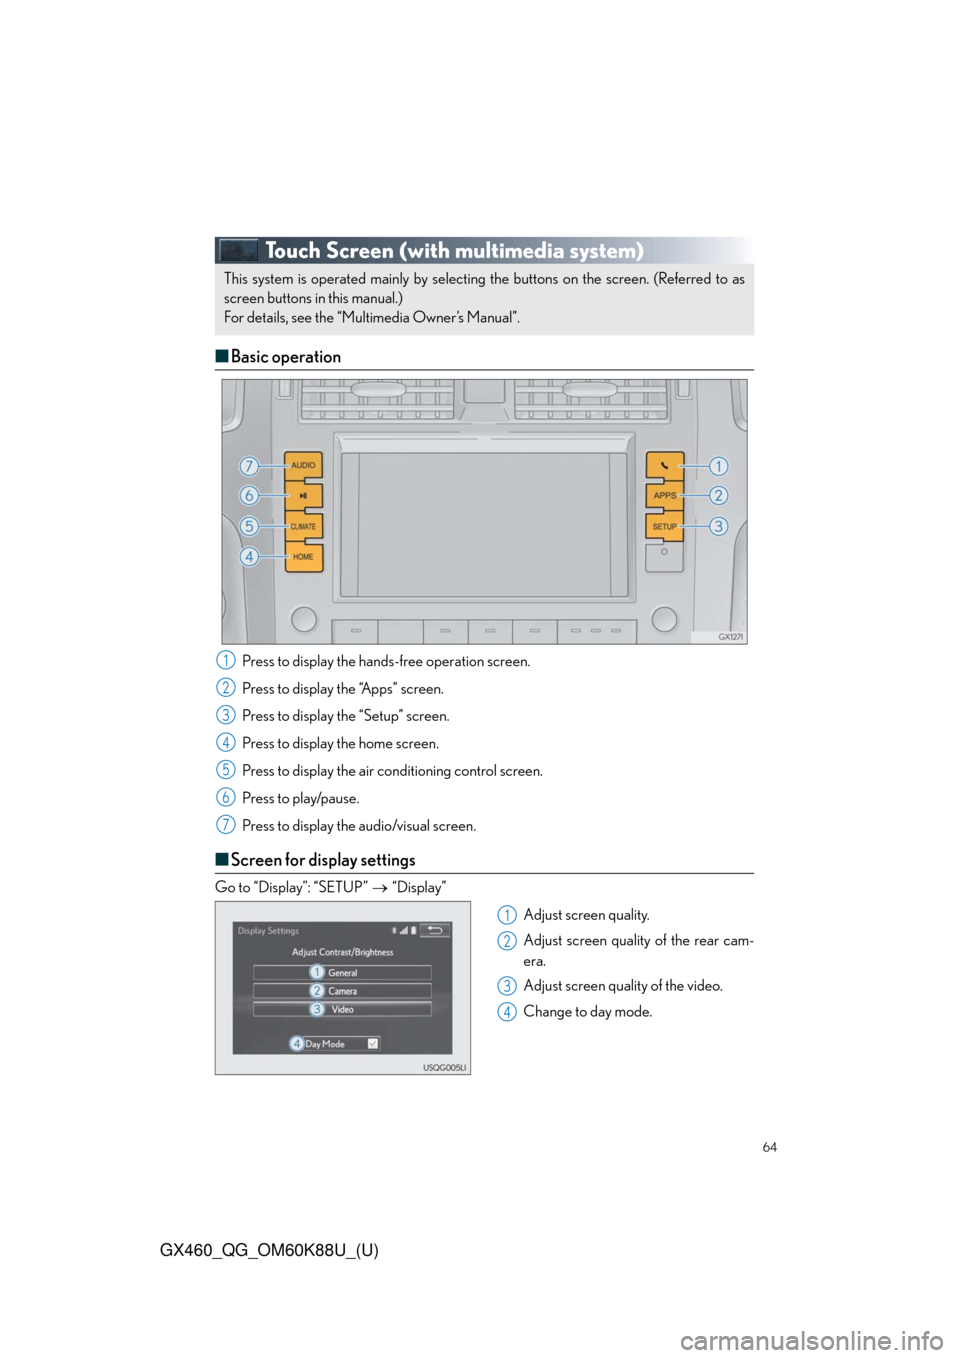 Lexus GX460 2014  Key information / LEXUS 2014 GX460 QUICK GUIDE OWNERS MANUAL (OM60K88U) 64
GX460_QG_OM60K88U_(U)
Touch Screen (with multimedia system)
■Basic operation
Press to display the hands-free operation screen.
Press to display the “Apps” screen.
Press to display the “Setu